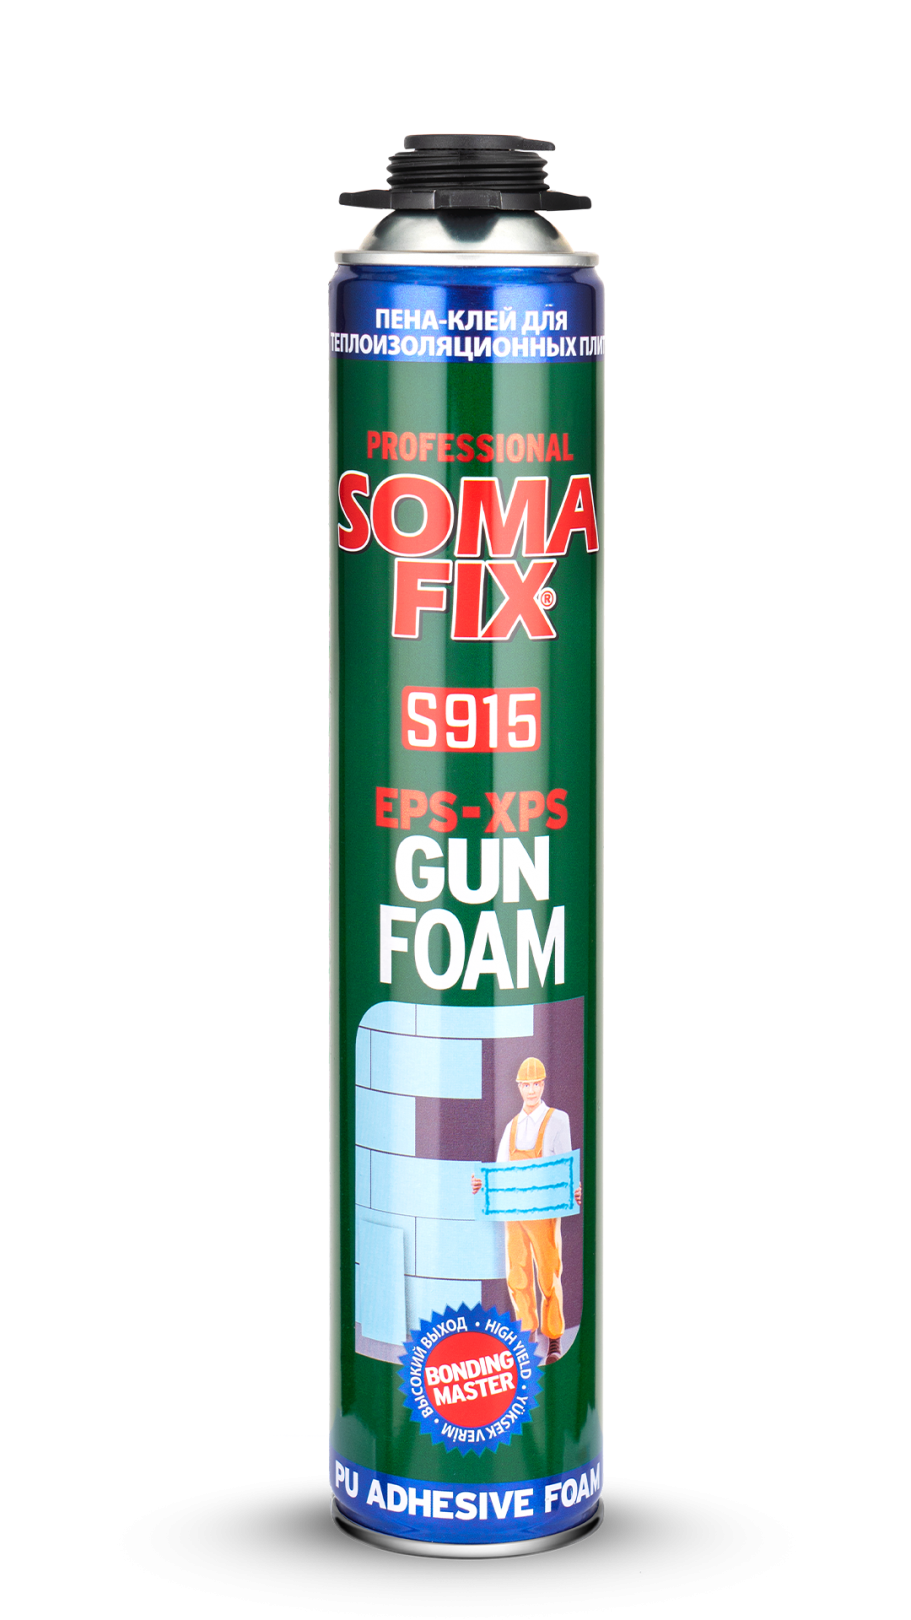 Somafix EPS - XPS Polyurethane Adhesive Gun Foam S915